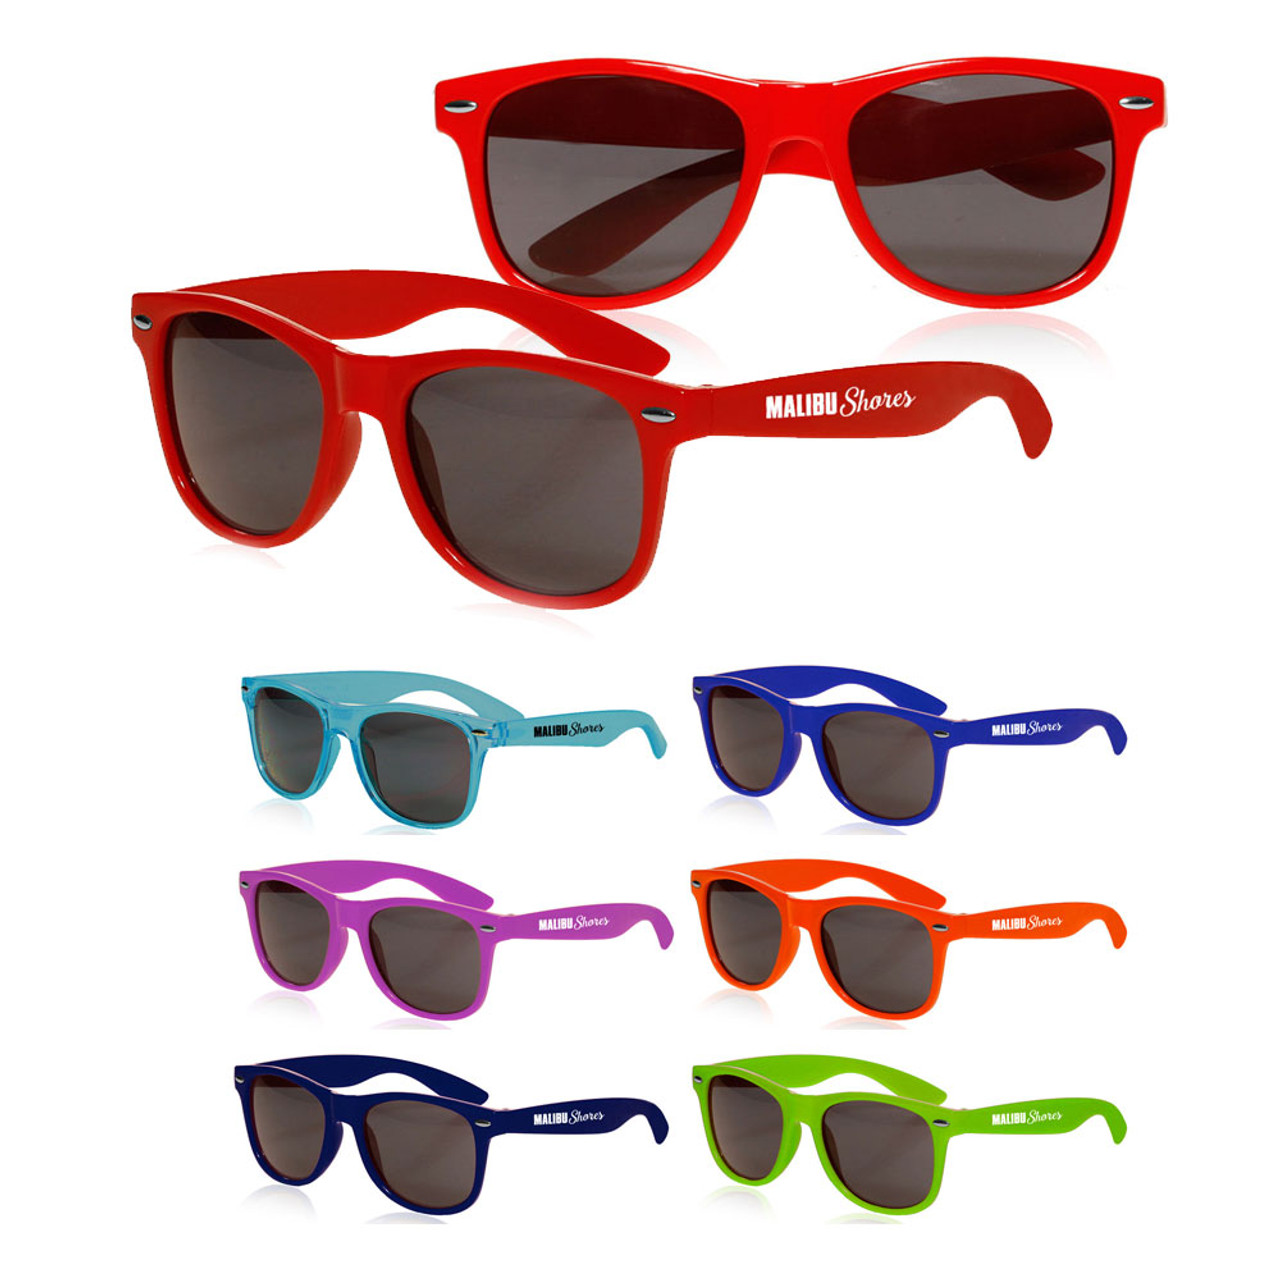 Promo Polarized Sunglasses (5.75